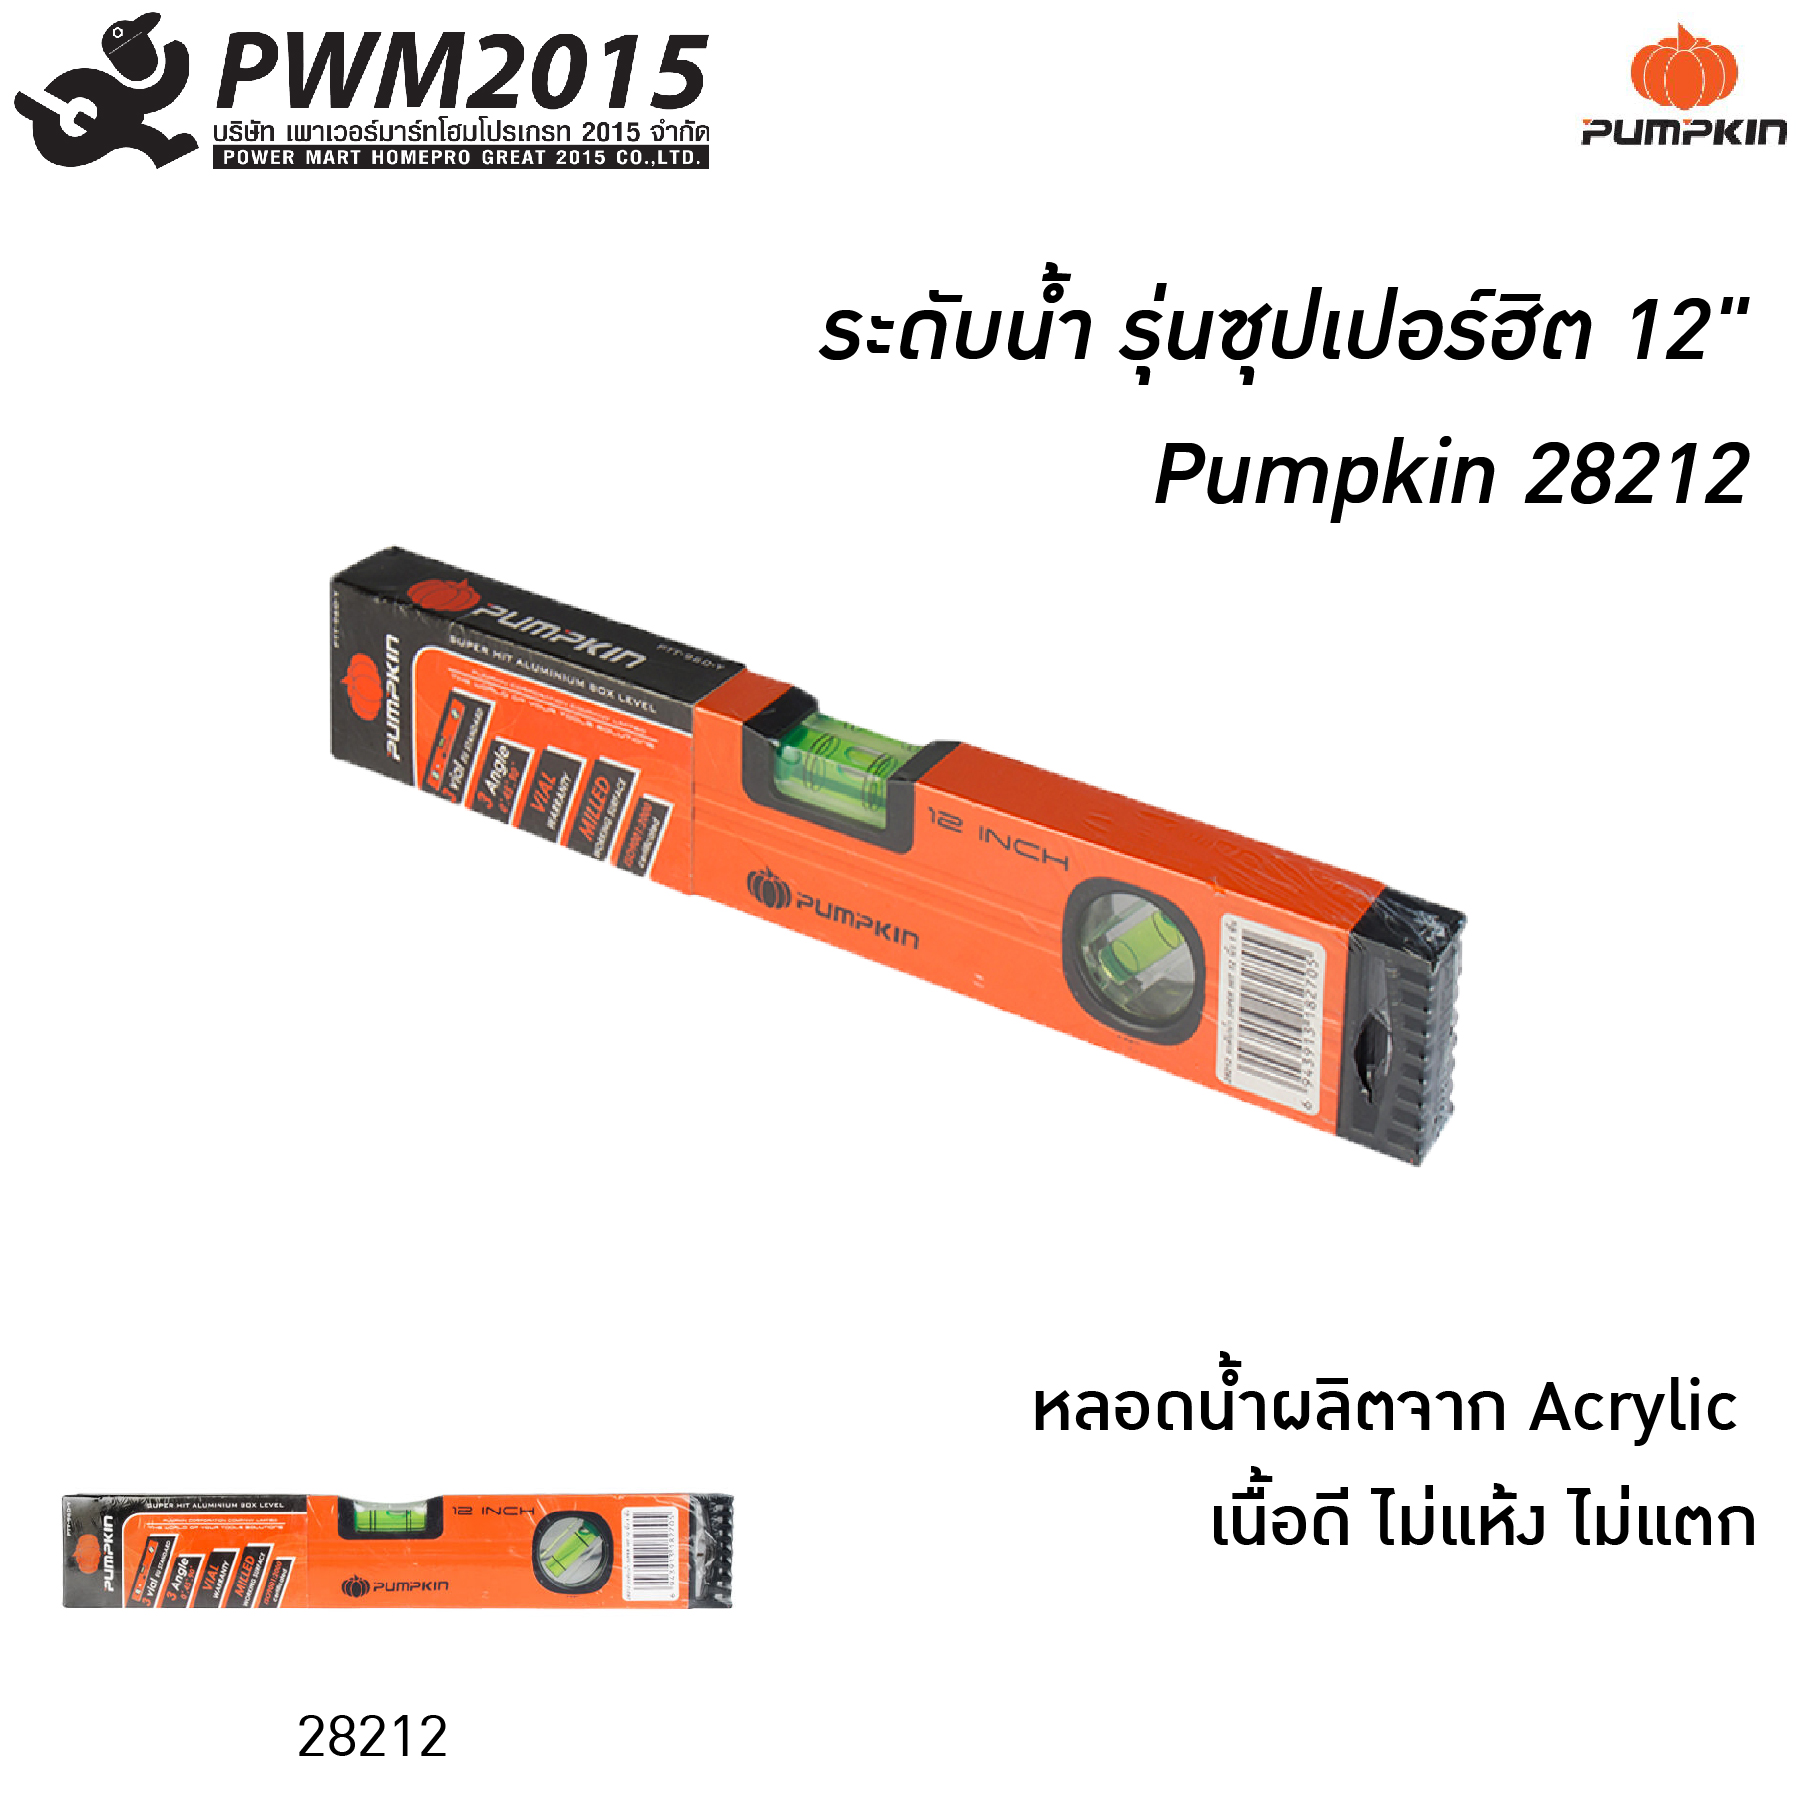 PUMPKIN ระดับน้ำ วัดระดับ 12 นิ้ว 28212 ที่วัดระดับน้ำ รุ่นซุปเปอร์ฮิต หลอดน้ำผลิตจาก Acrylic เนื้อดี ไม่แห้ง ไม่แตก PWM2015